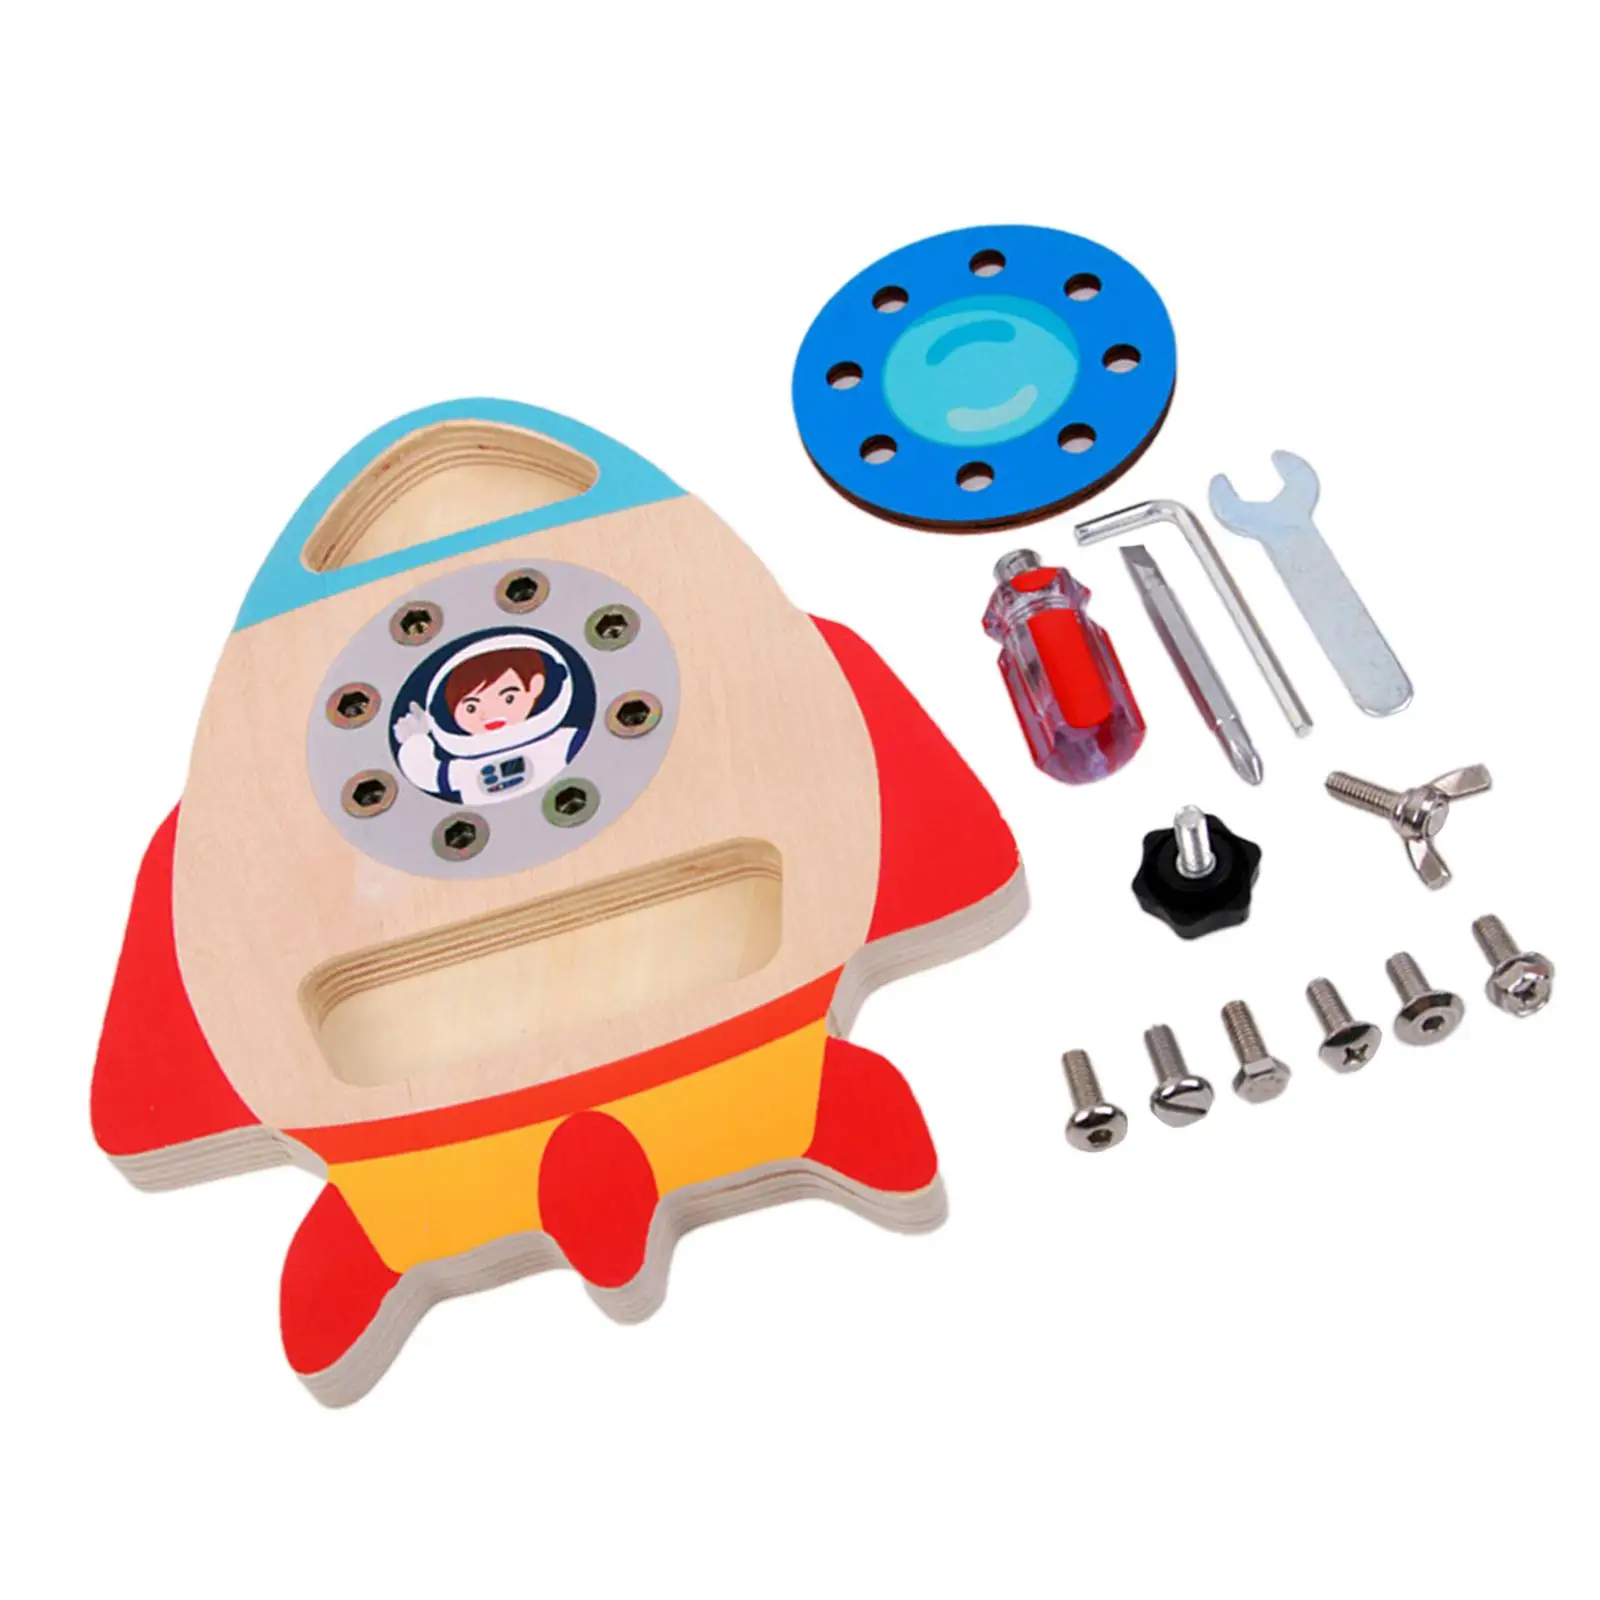 Rocket Screwdriver Board Set Educational Sensory Learning Toy Develop Fine Motor Skills Construction Set